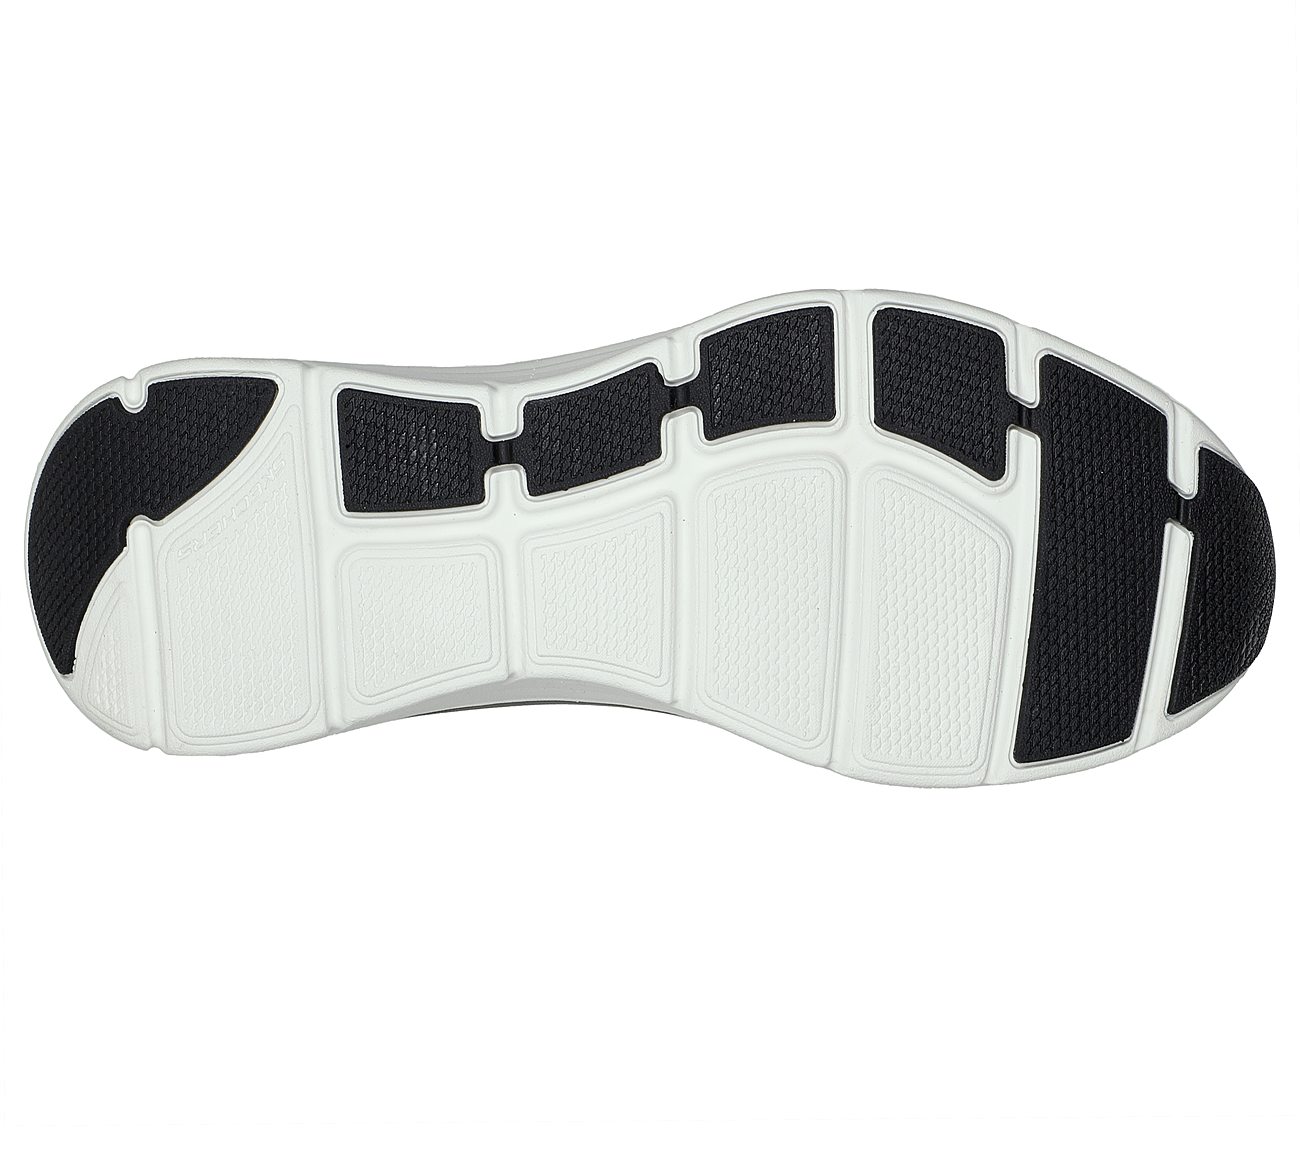 ARCH FIT D'LUX-KEY JOURNEY, BLACK/WHITE Footwear Bottom View